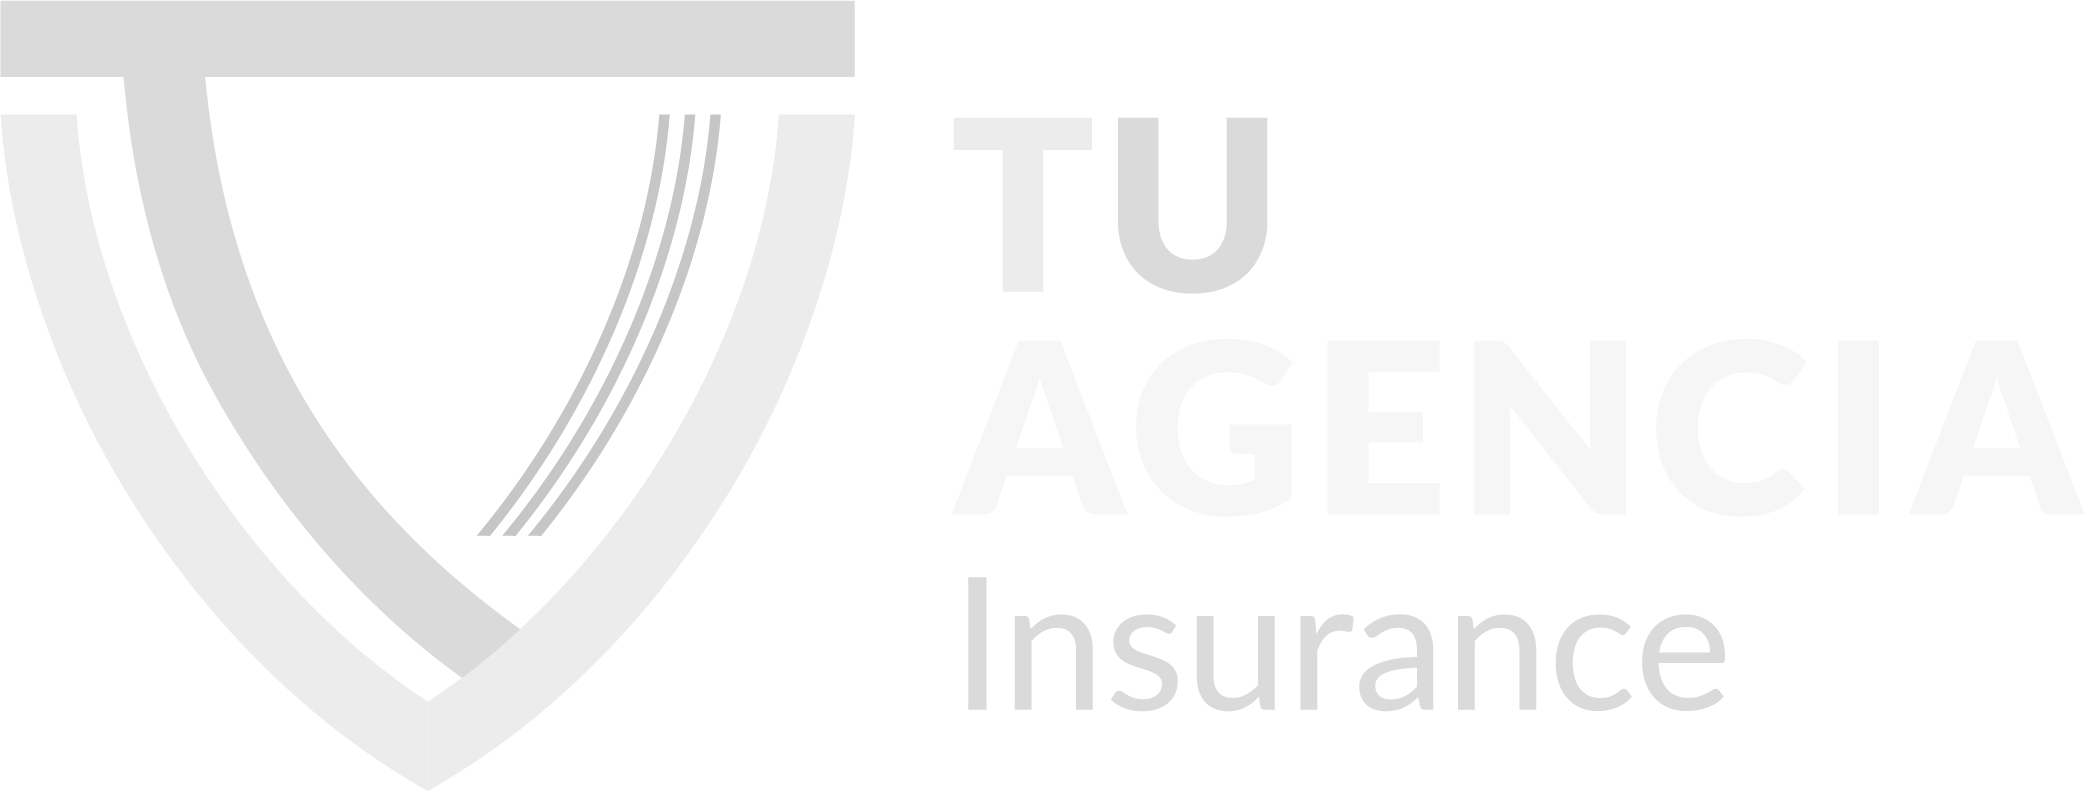 Tu Agencia Insurance Logo